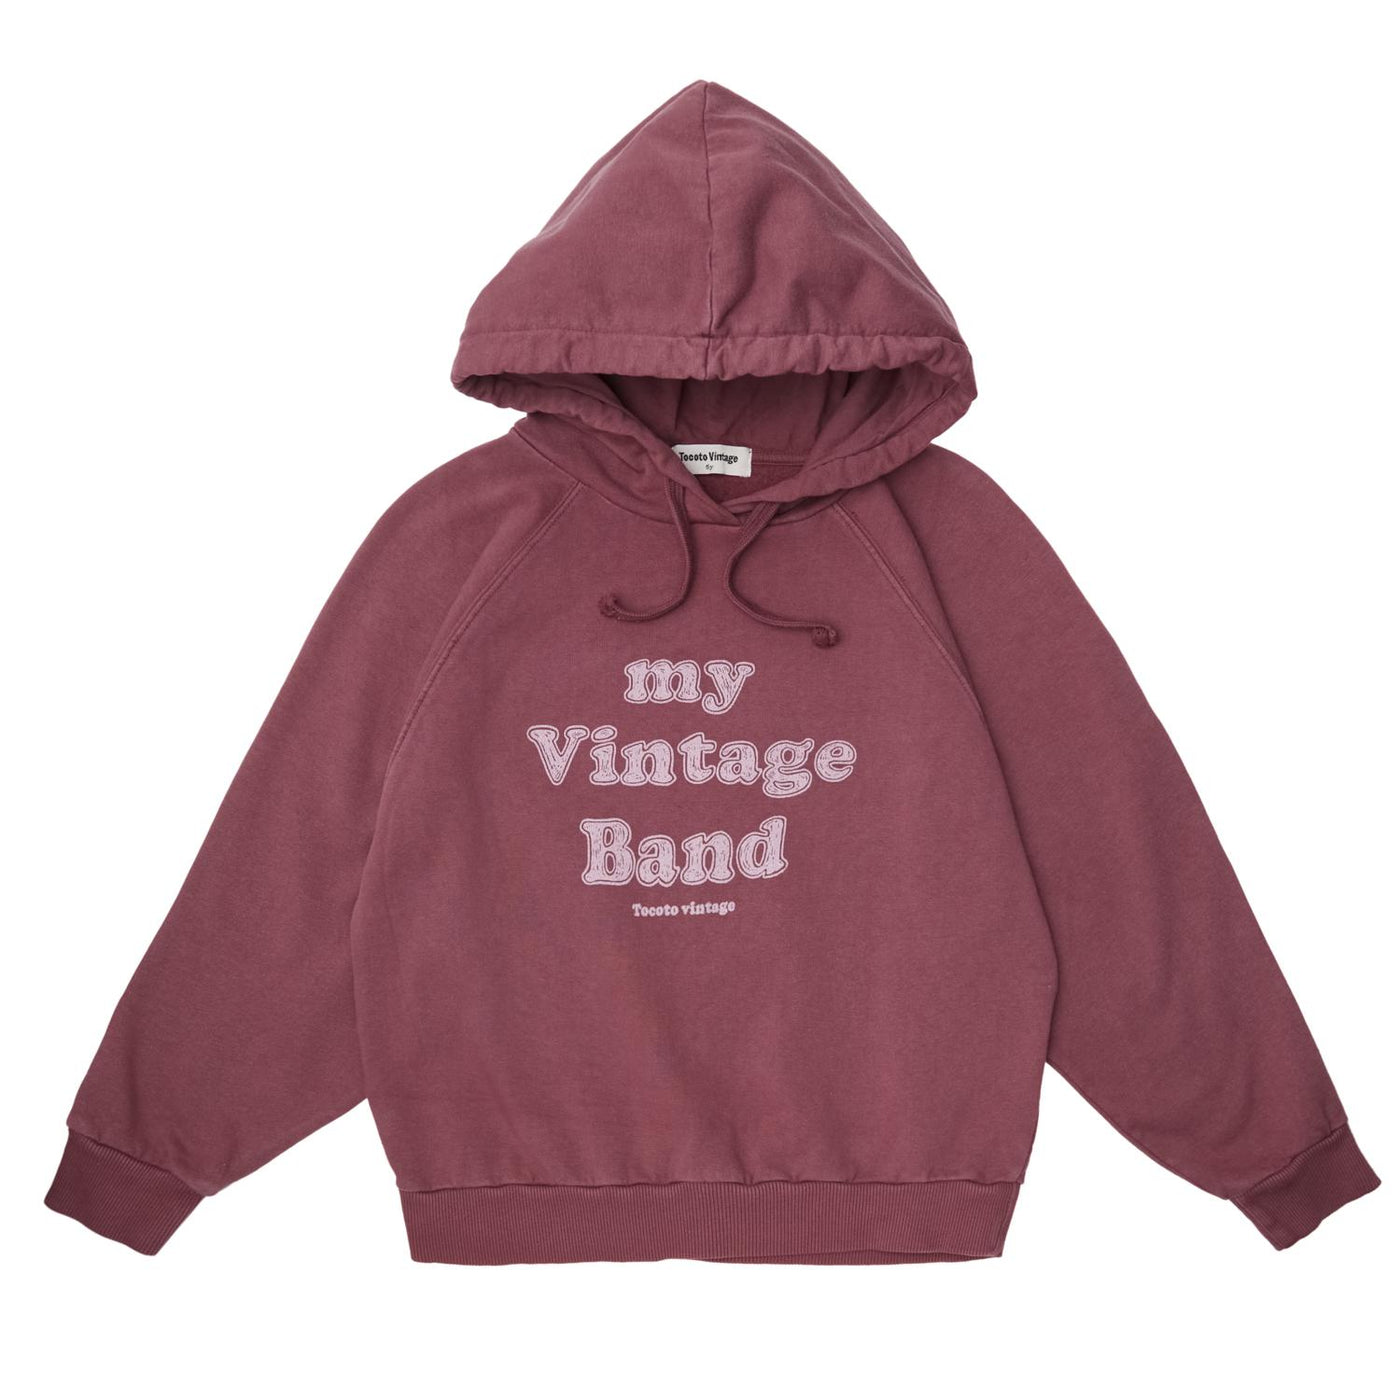 Hooded Sweatshirt "Vintage Band"